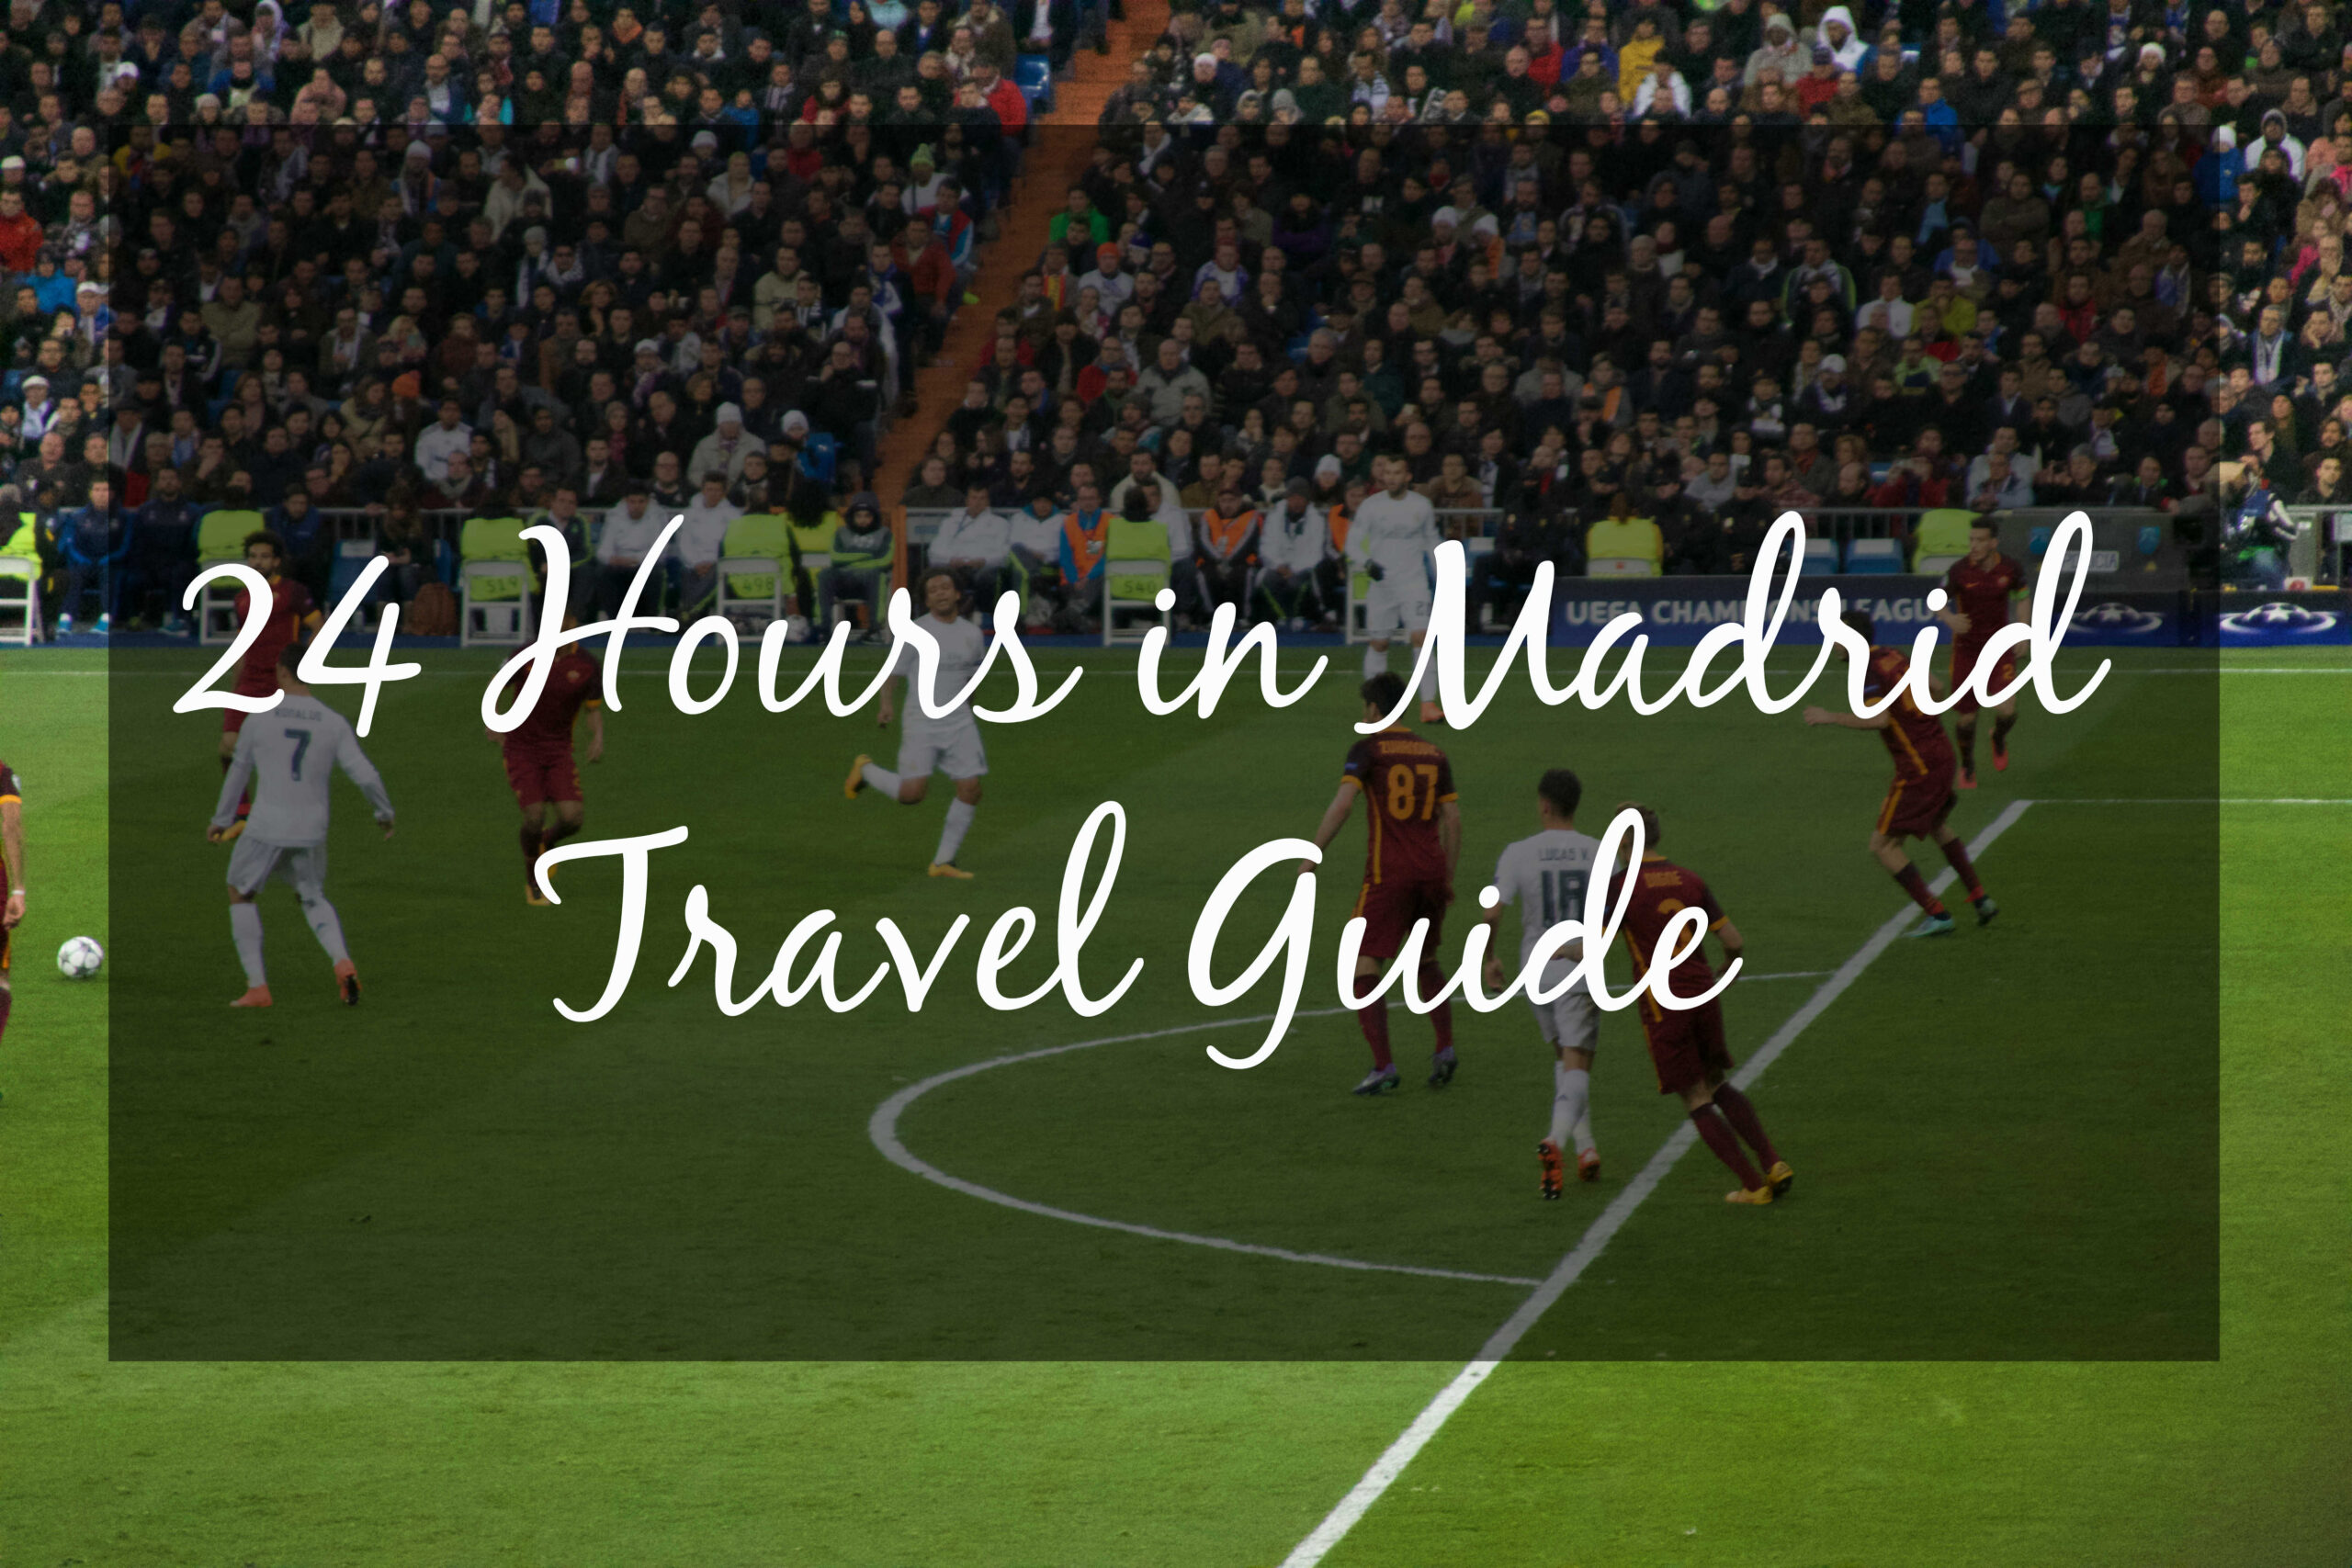 Jordan Taylor C - 24 Hours in Madrid Travel Guide